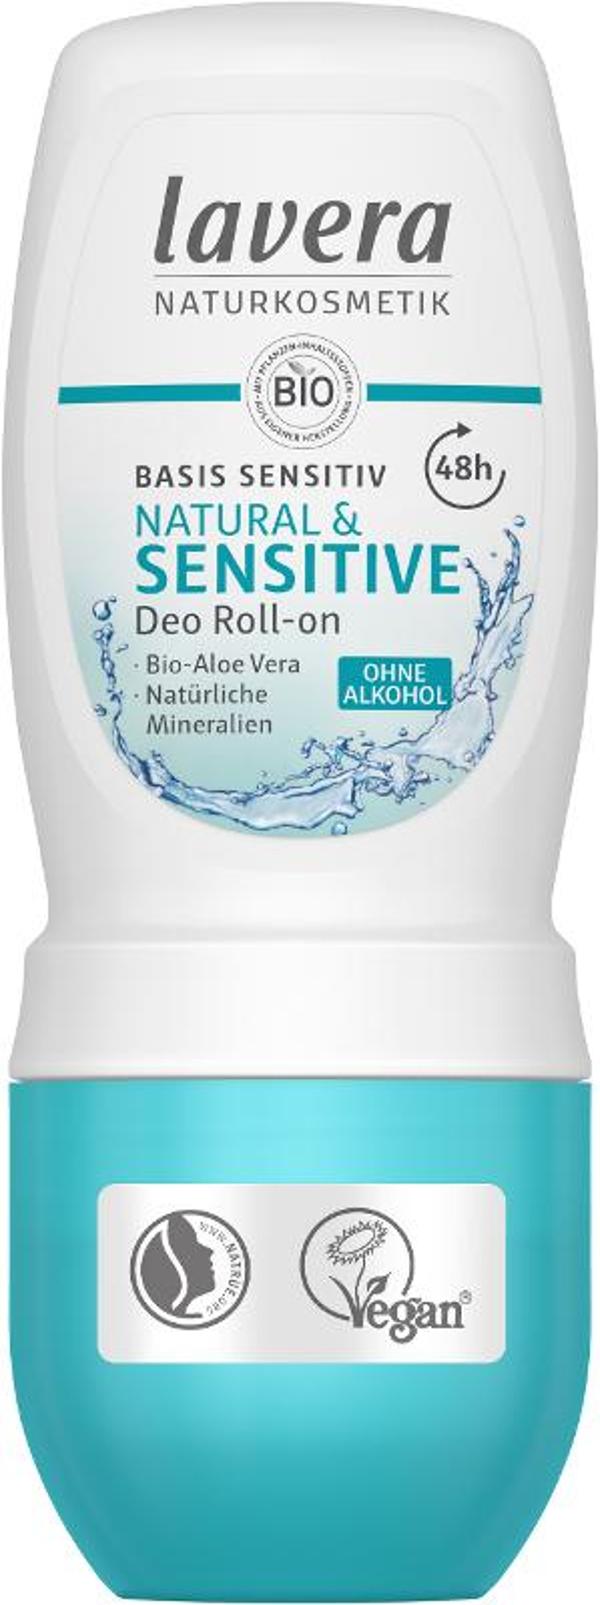 Produktfoto zu Deo Roll-On sensitiv Aloe Vera, 50 ml